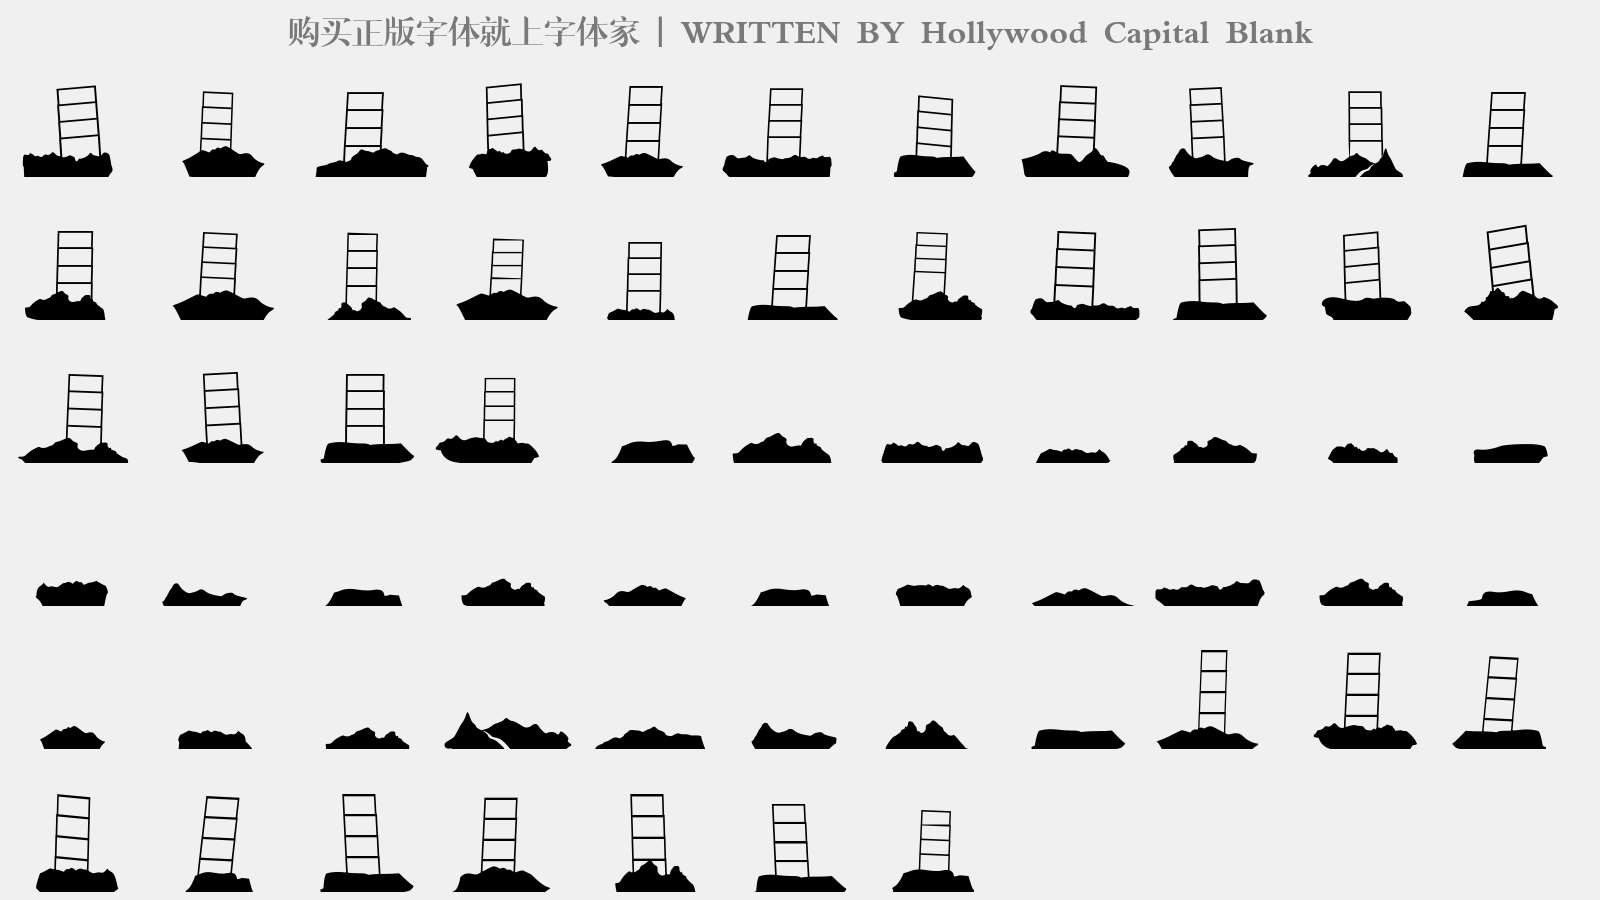 Hollywood Capital Blank - 大写字母/小写字母/数字